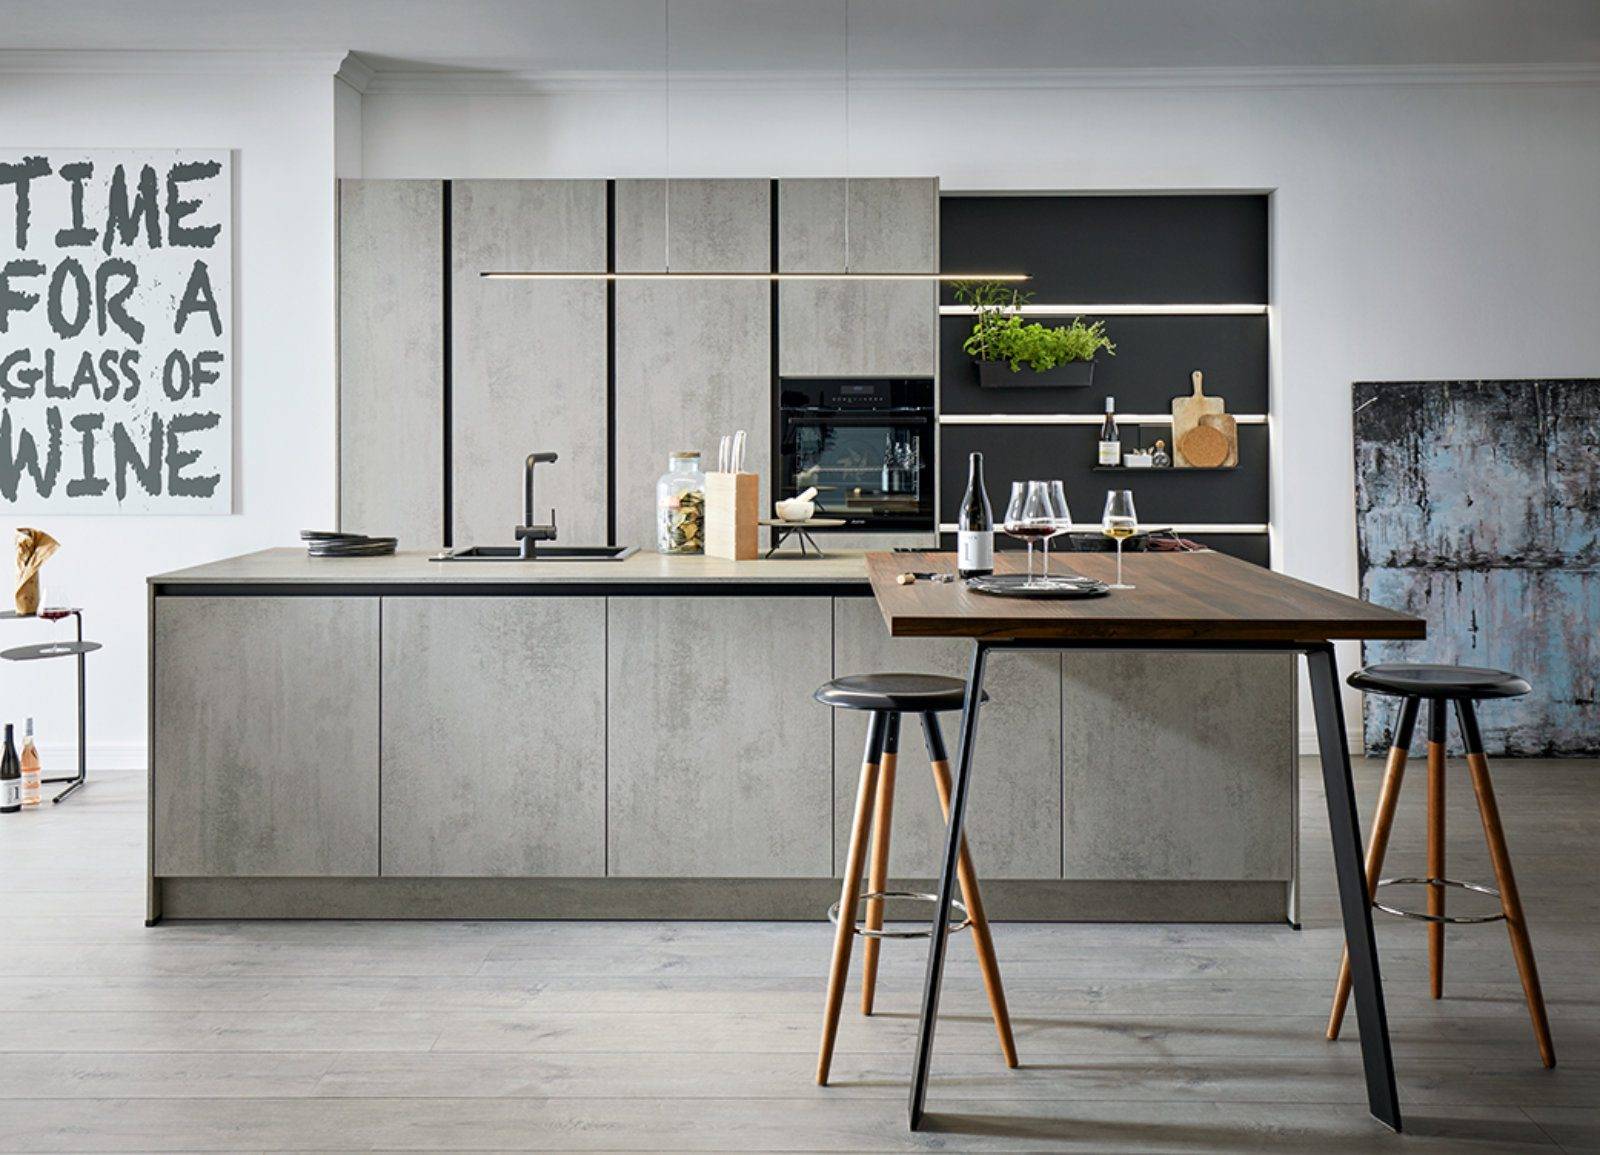 Schuller Concrete Modern Kitchen With Island 2 | House of Harrogate, Harrogate